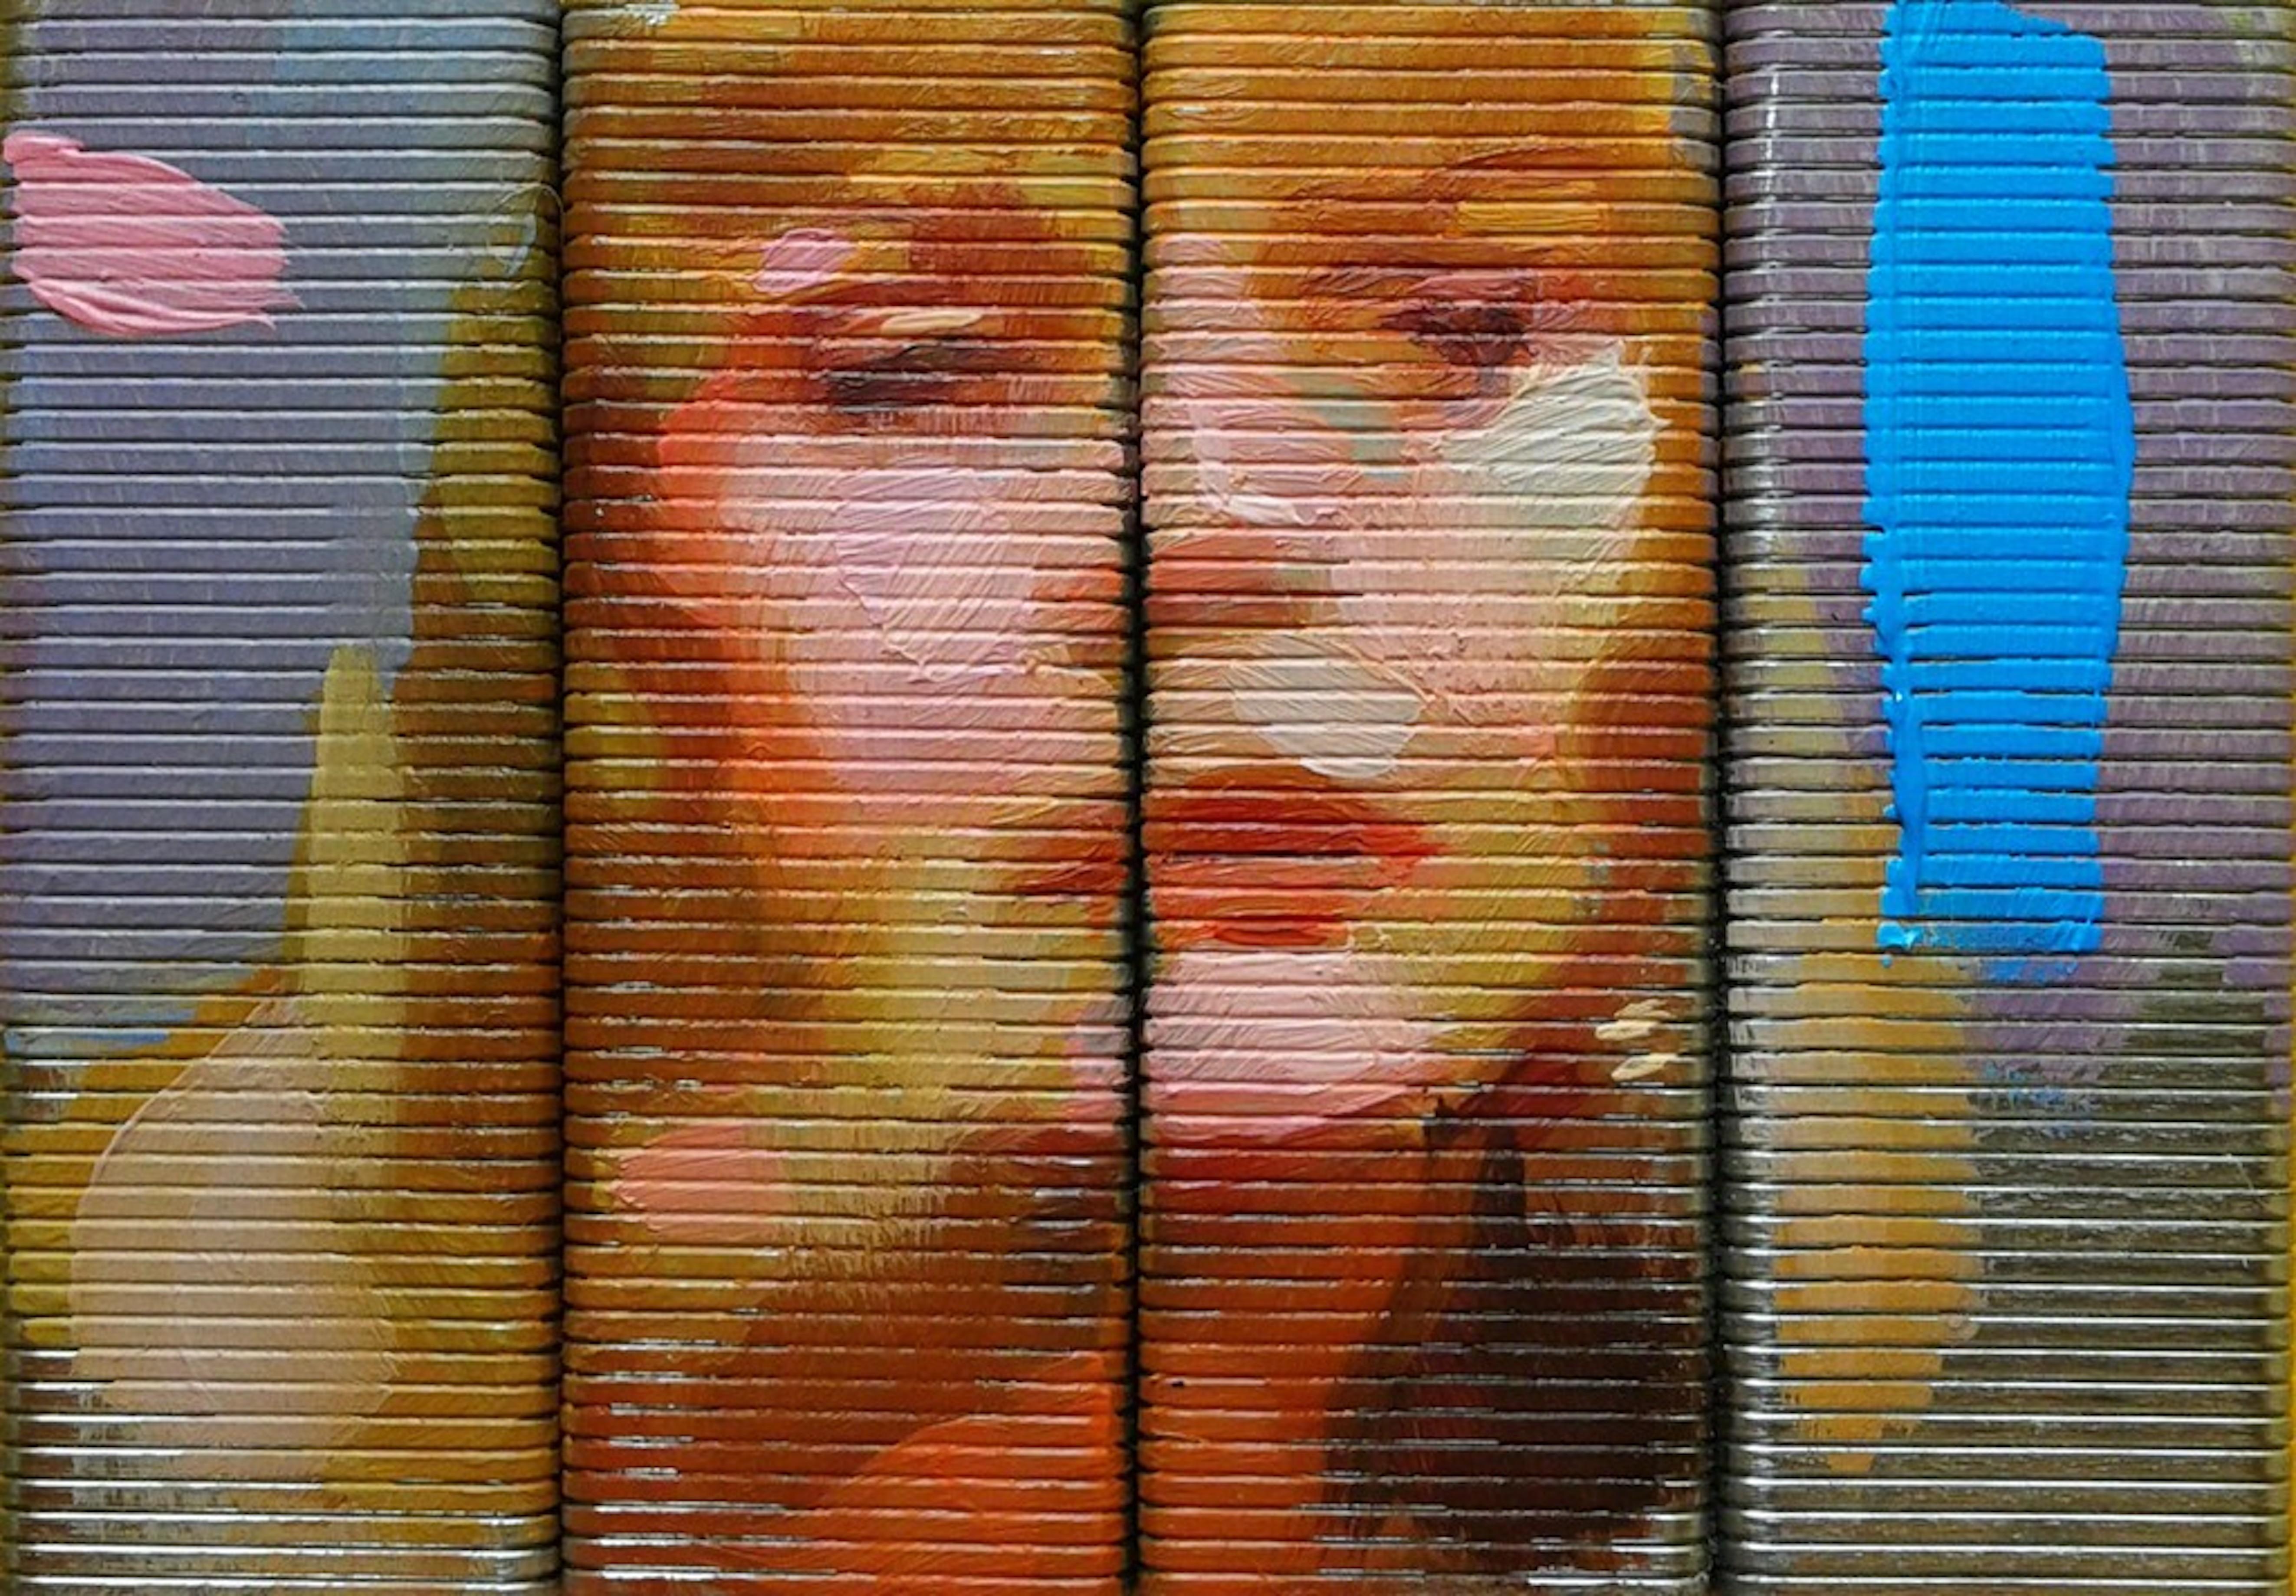 Danco Robert Duportai Garcia Figurative Painting - "Mujer Antigua", Danco Duportai, Expressionism, oil painting on staples, 2018